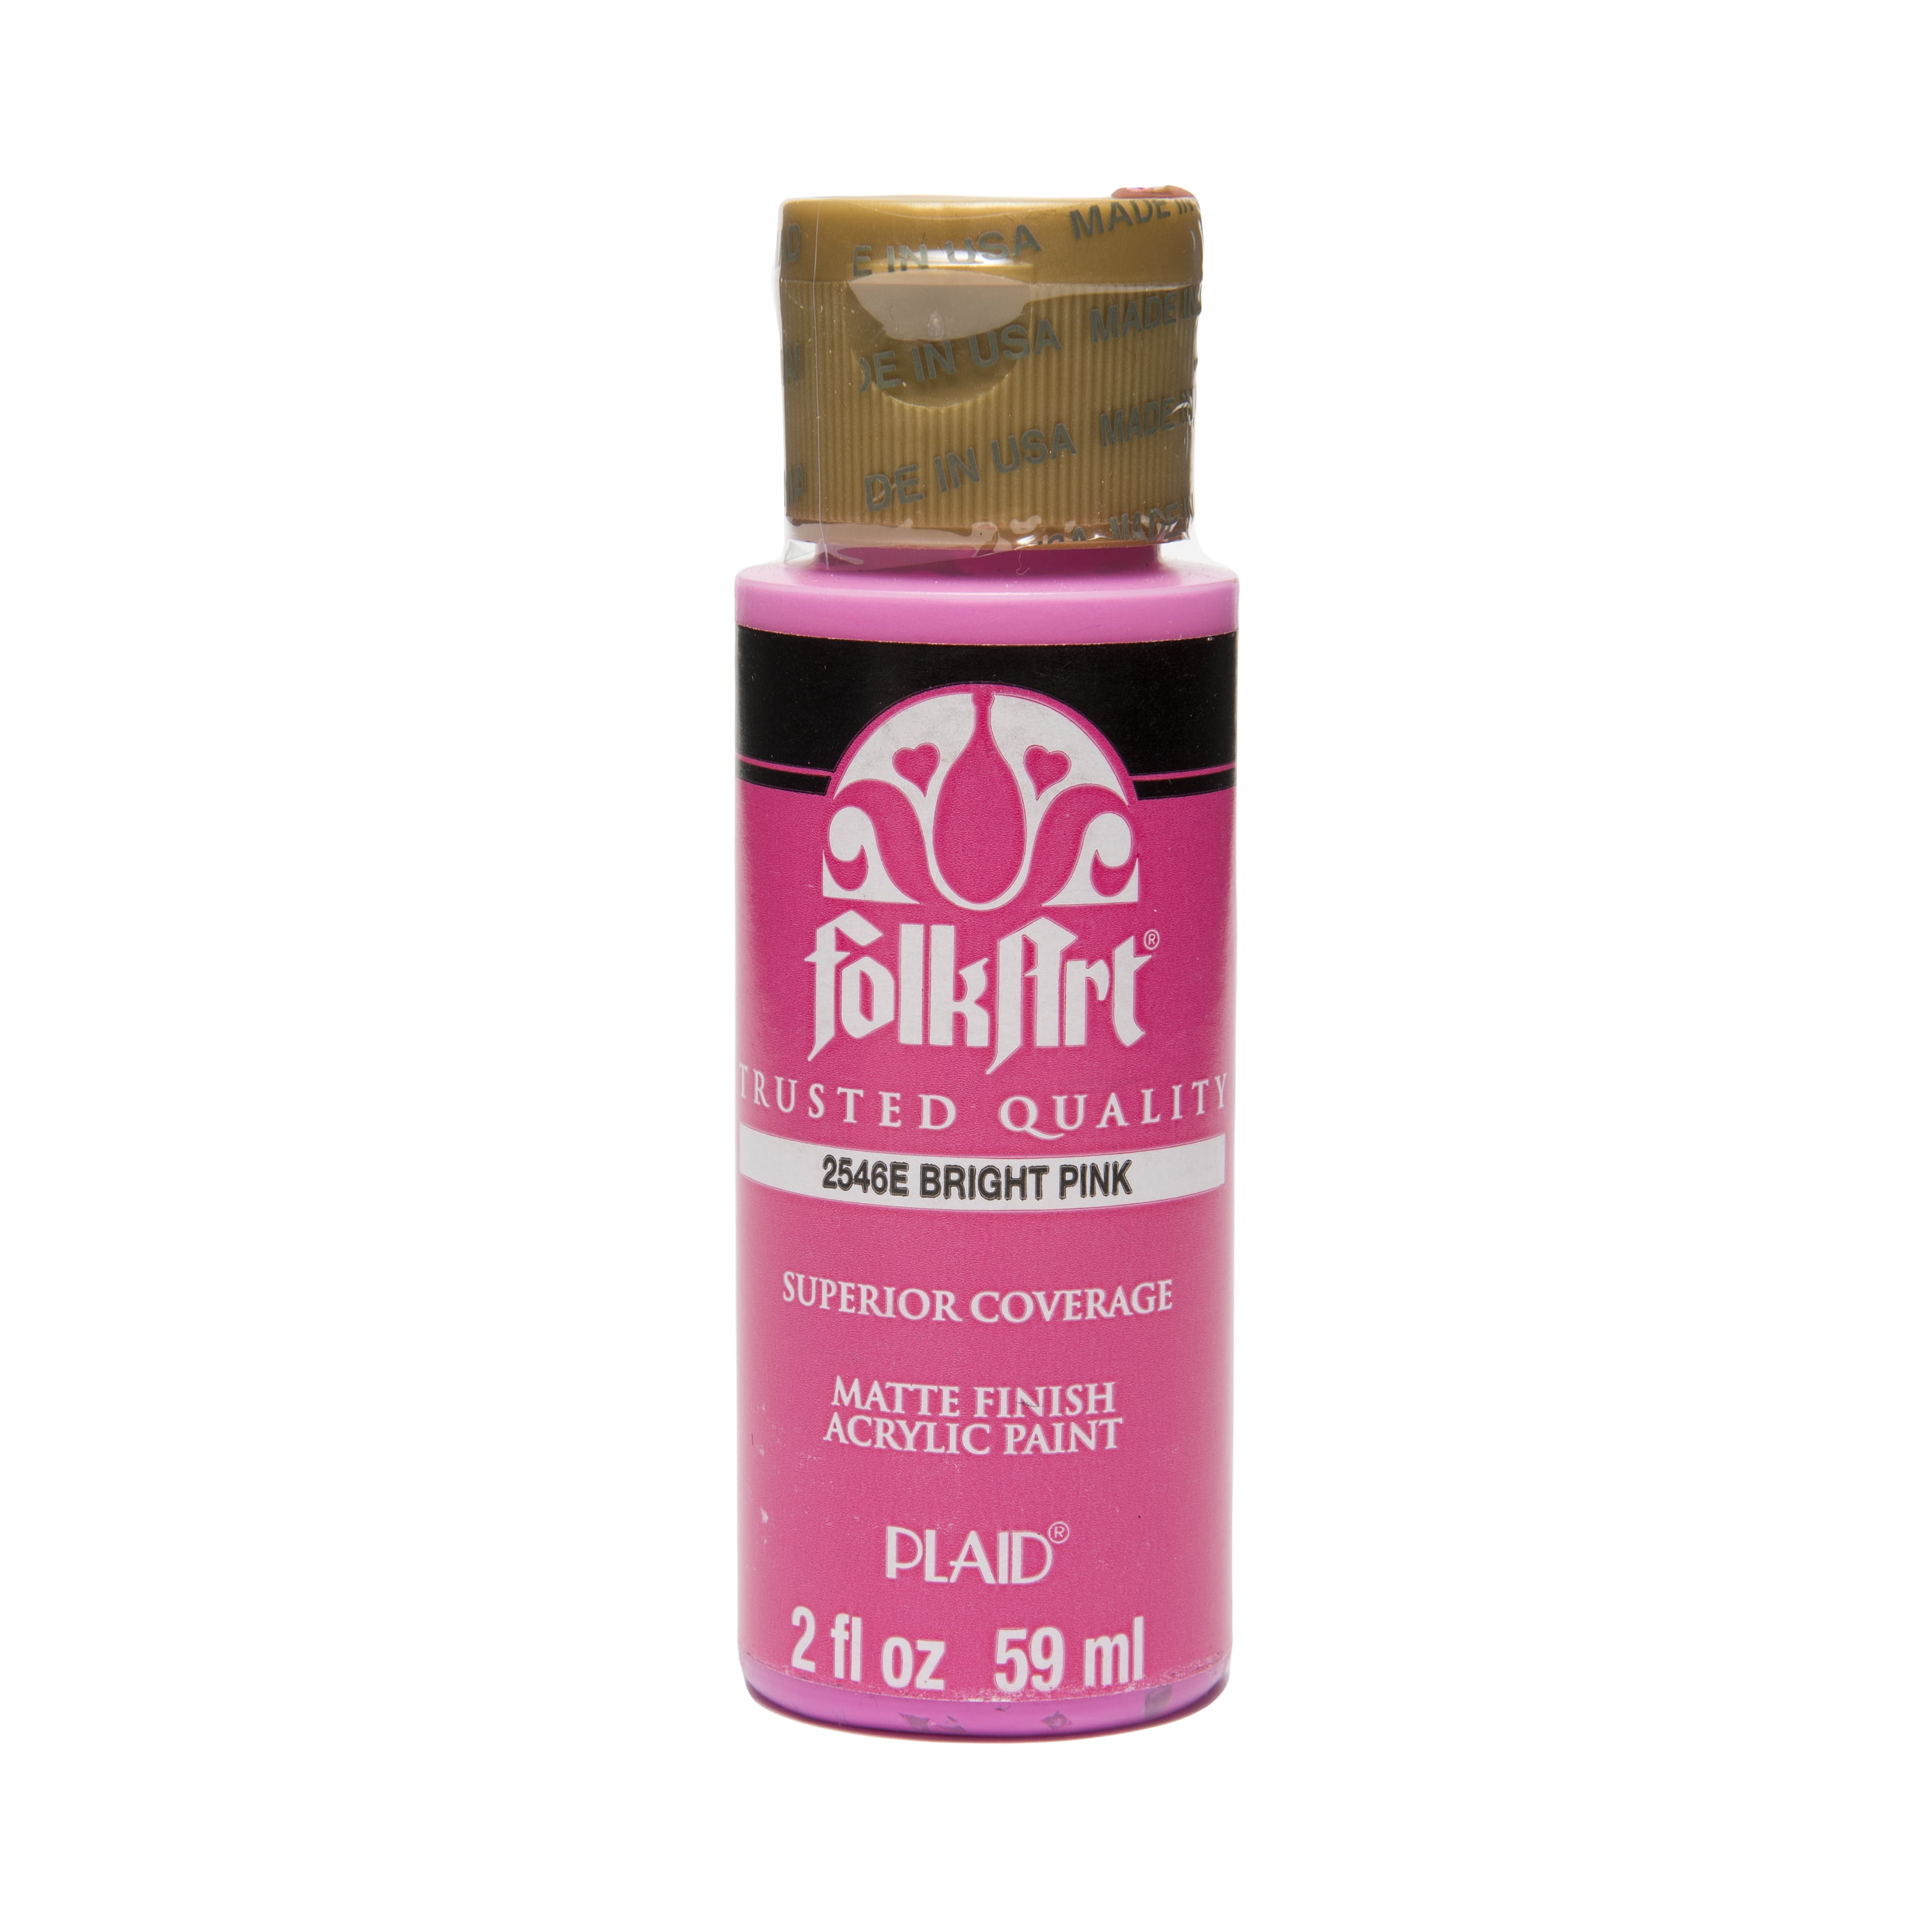 Shop Plaid FolkArt ® Best Pink Metallic Acrylic Color Kit - 96424